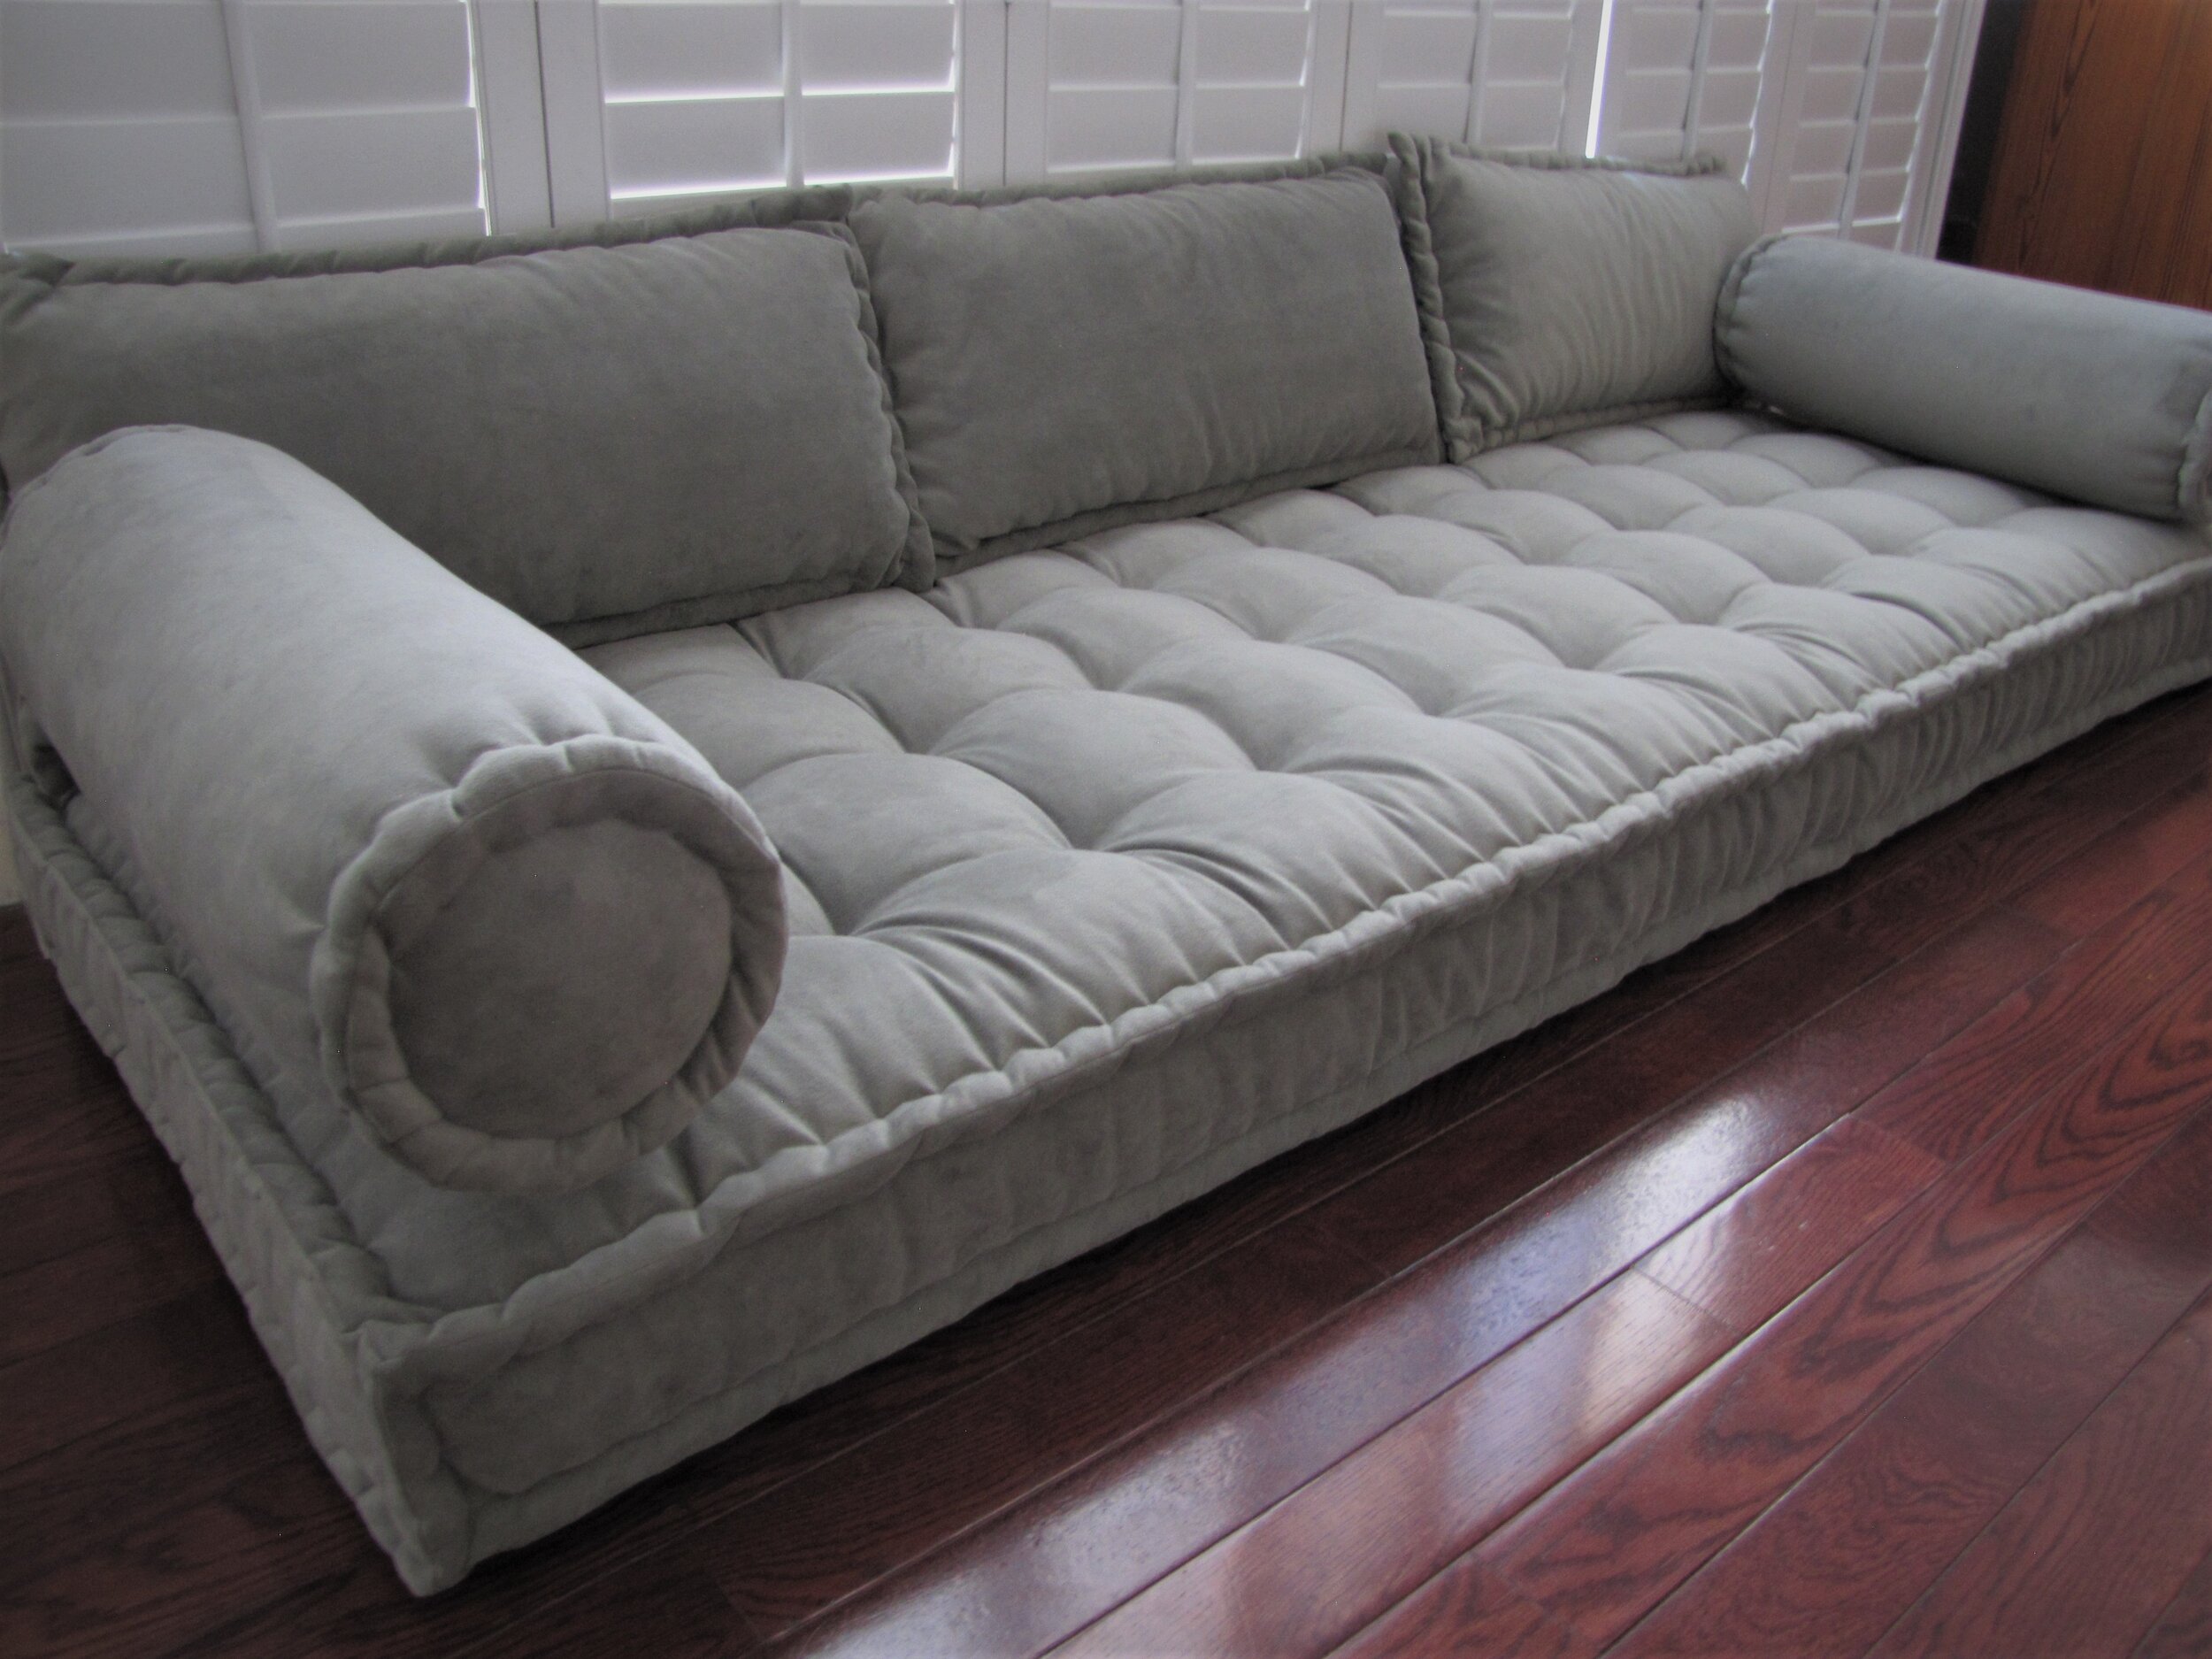 sofa cushion baroque sofa cushion,baroque home decor,floor window cushion,floor pillow,customizable French mattress cushion bench cushion